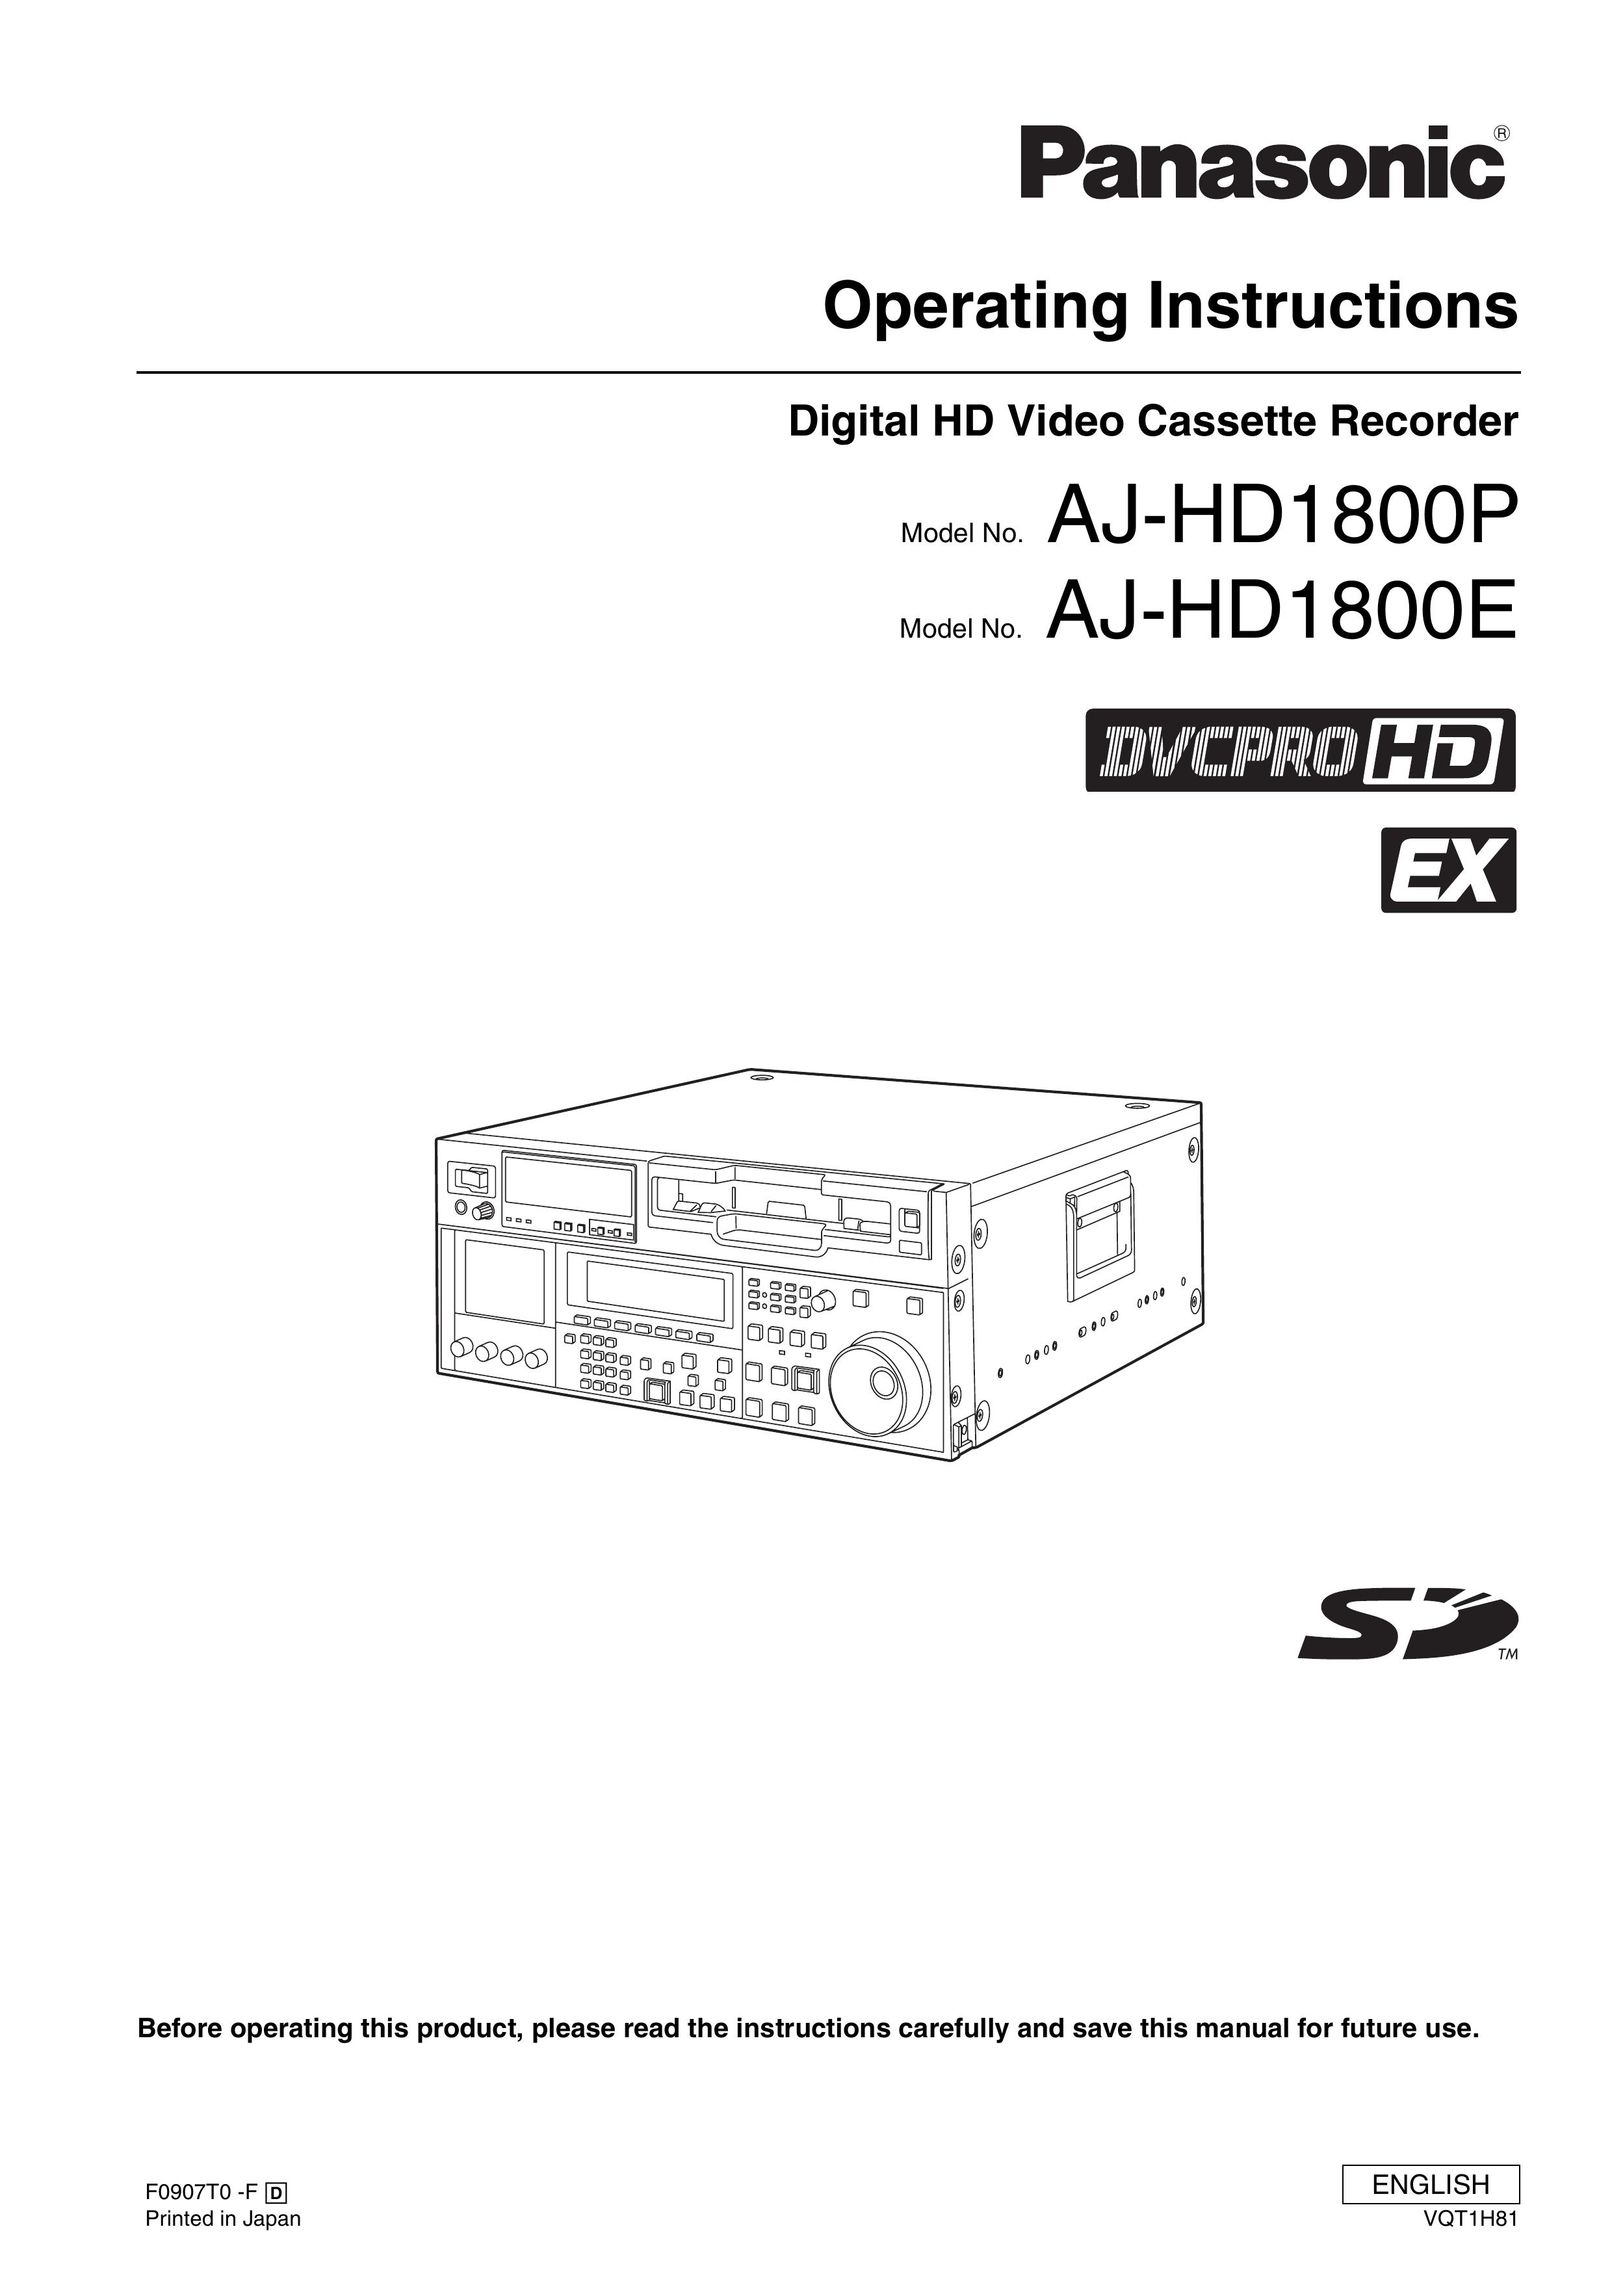 Panasonic AJ-HD1800P DVR User Manual